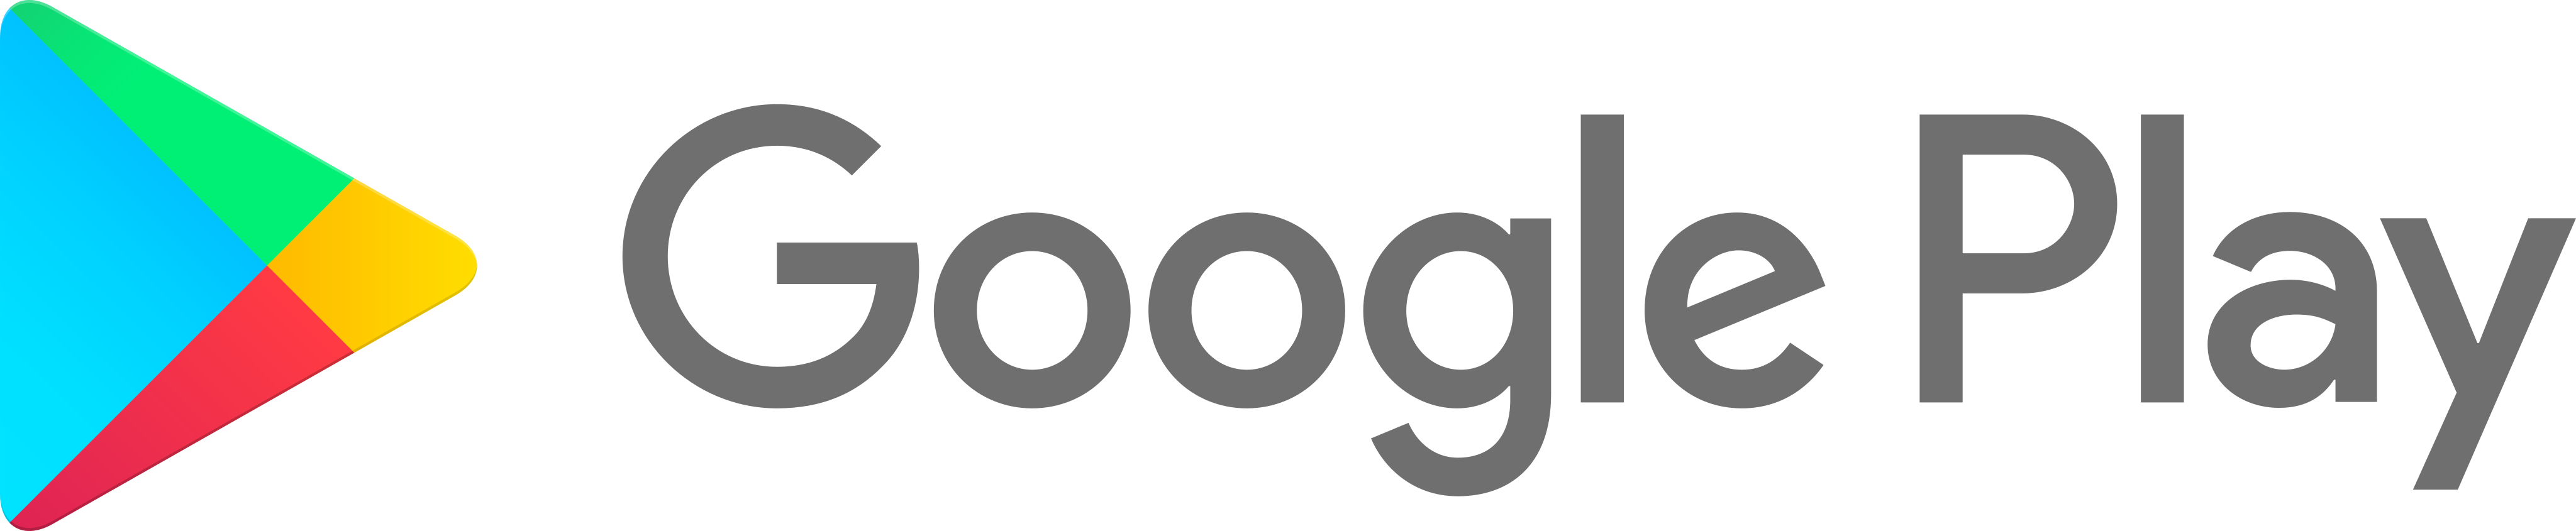 google play logo - Google Play Logo